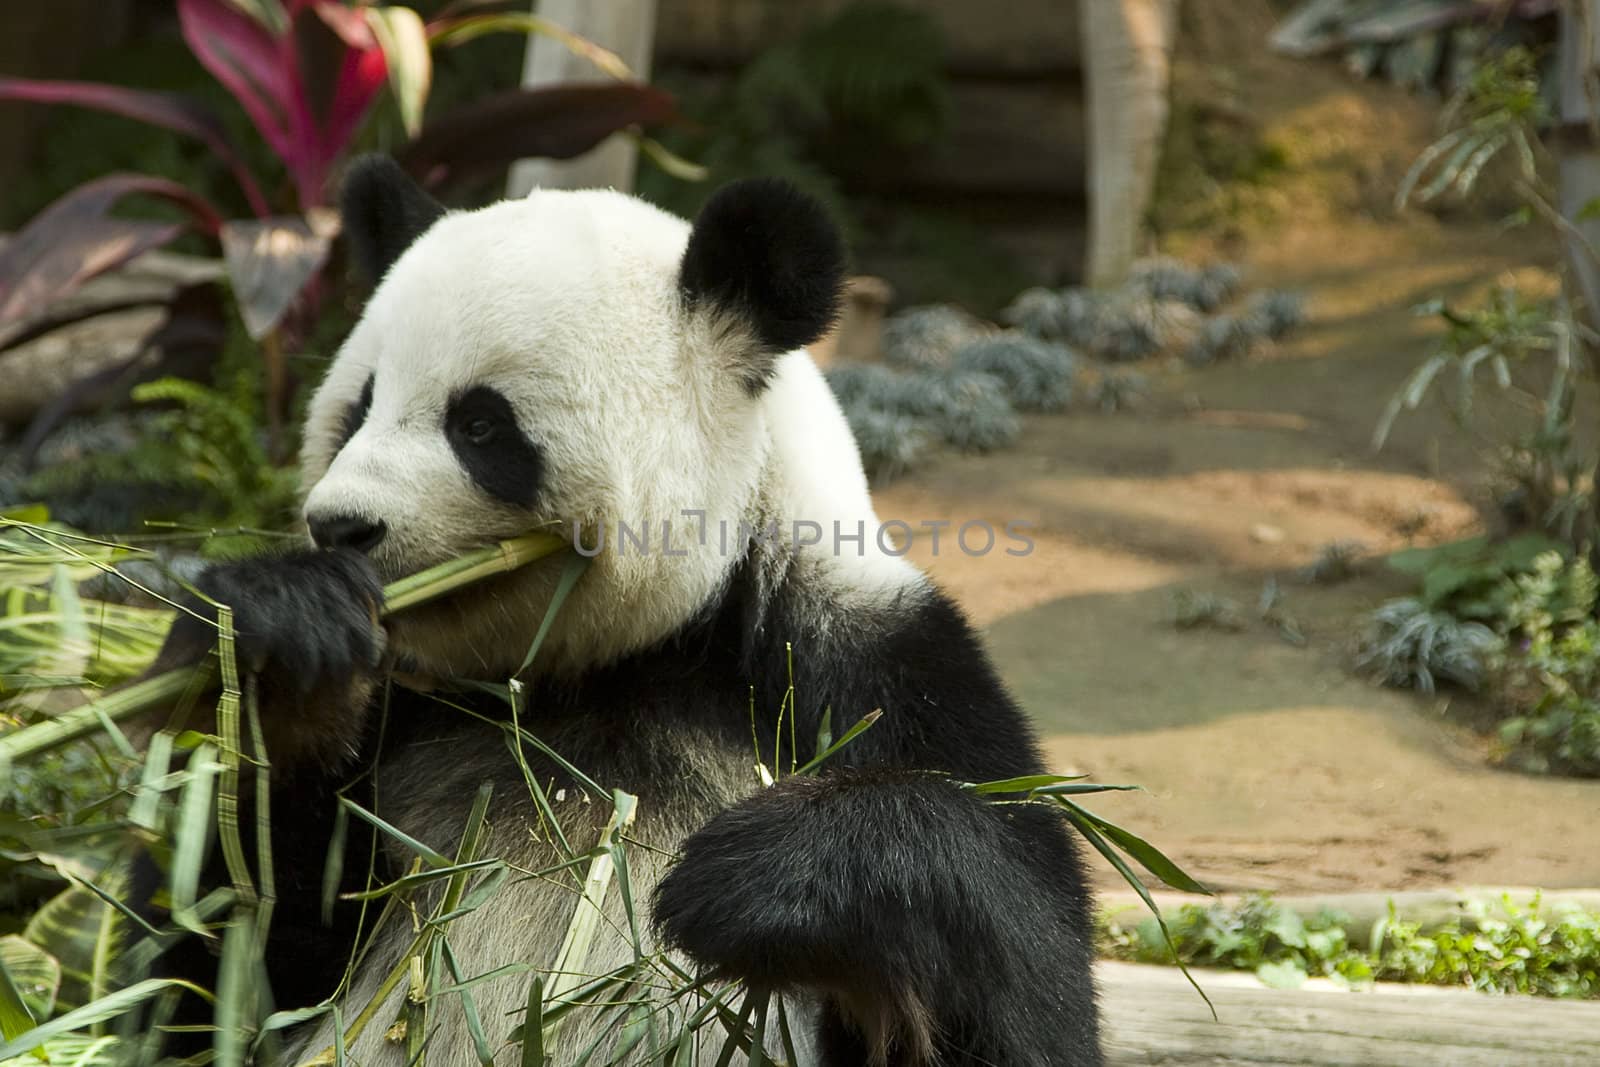 Panda in Chiang Mai zoo, Thailand, eating bamboo.